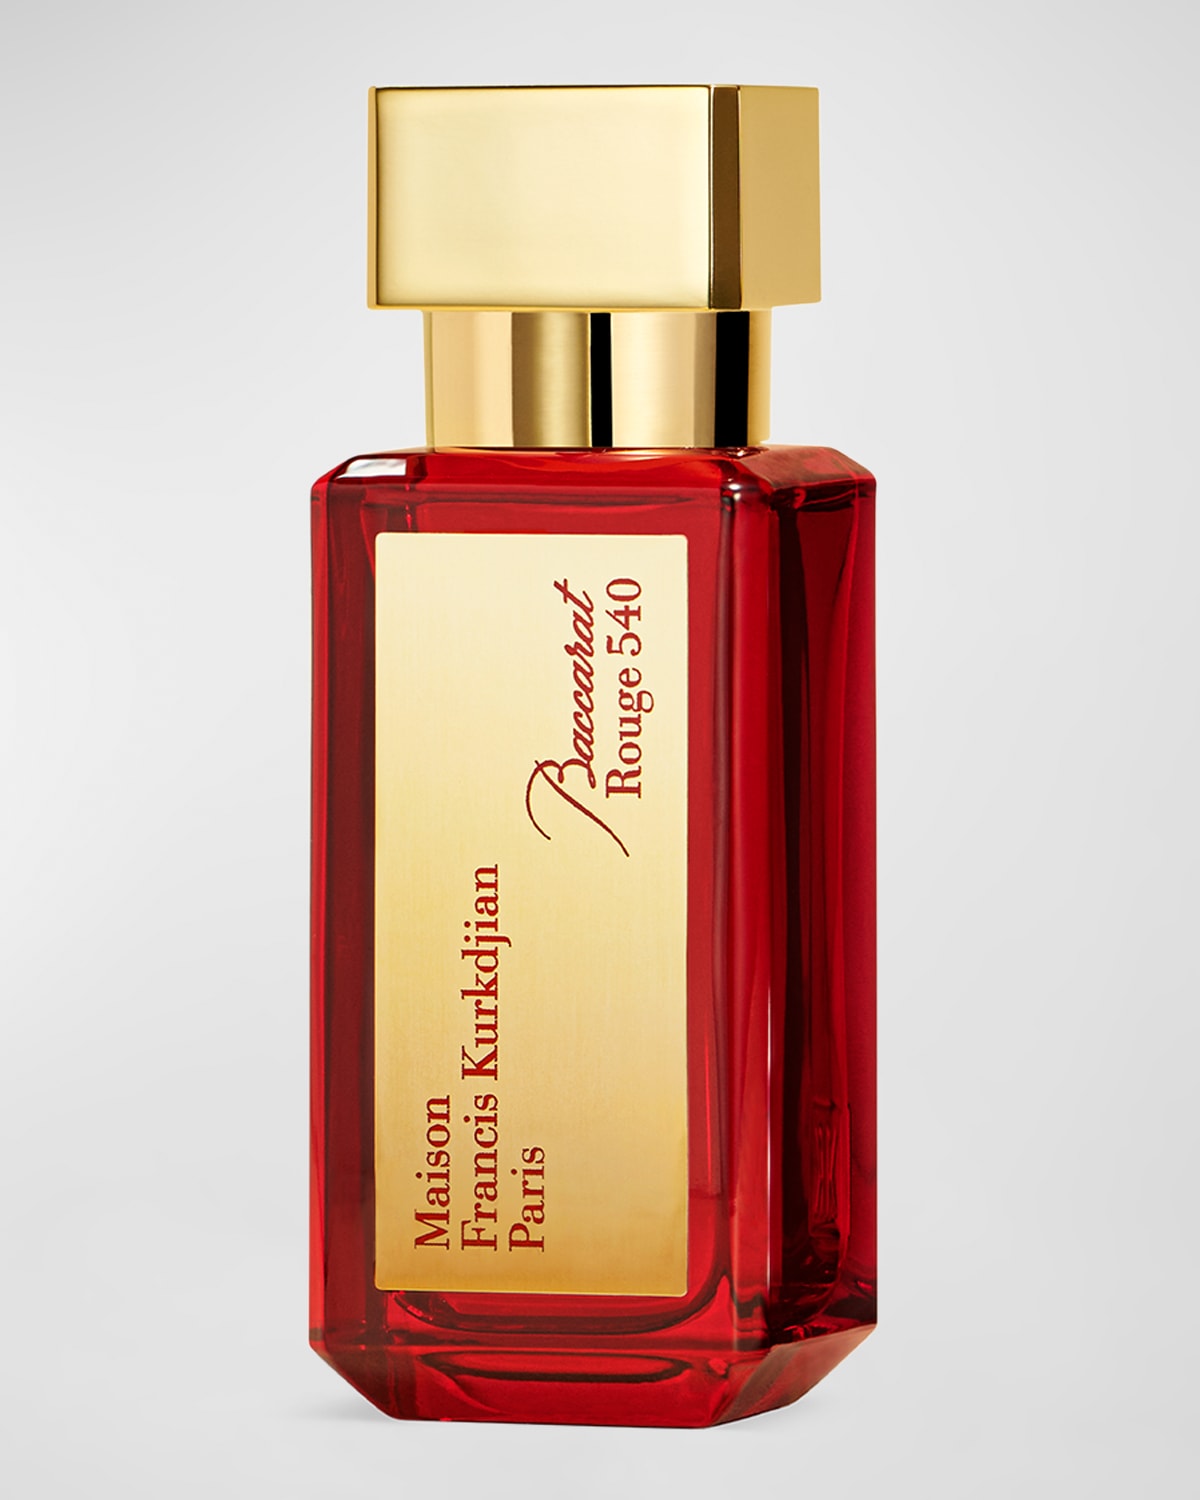 Baccarat Rouge 540 Extrait de parfum | Neiman Marcus